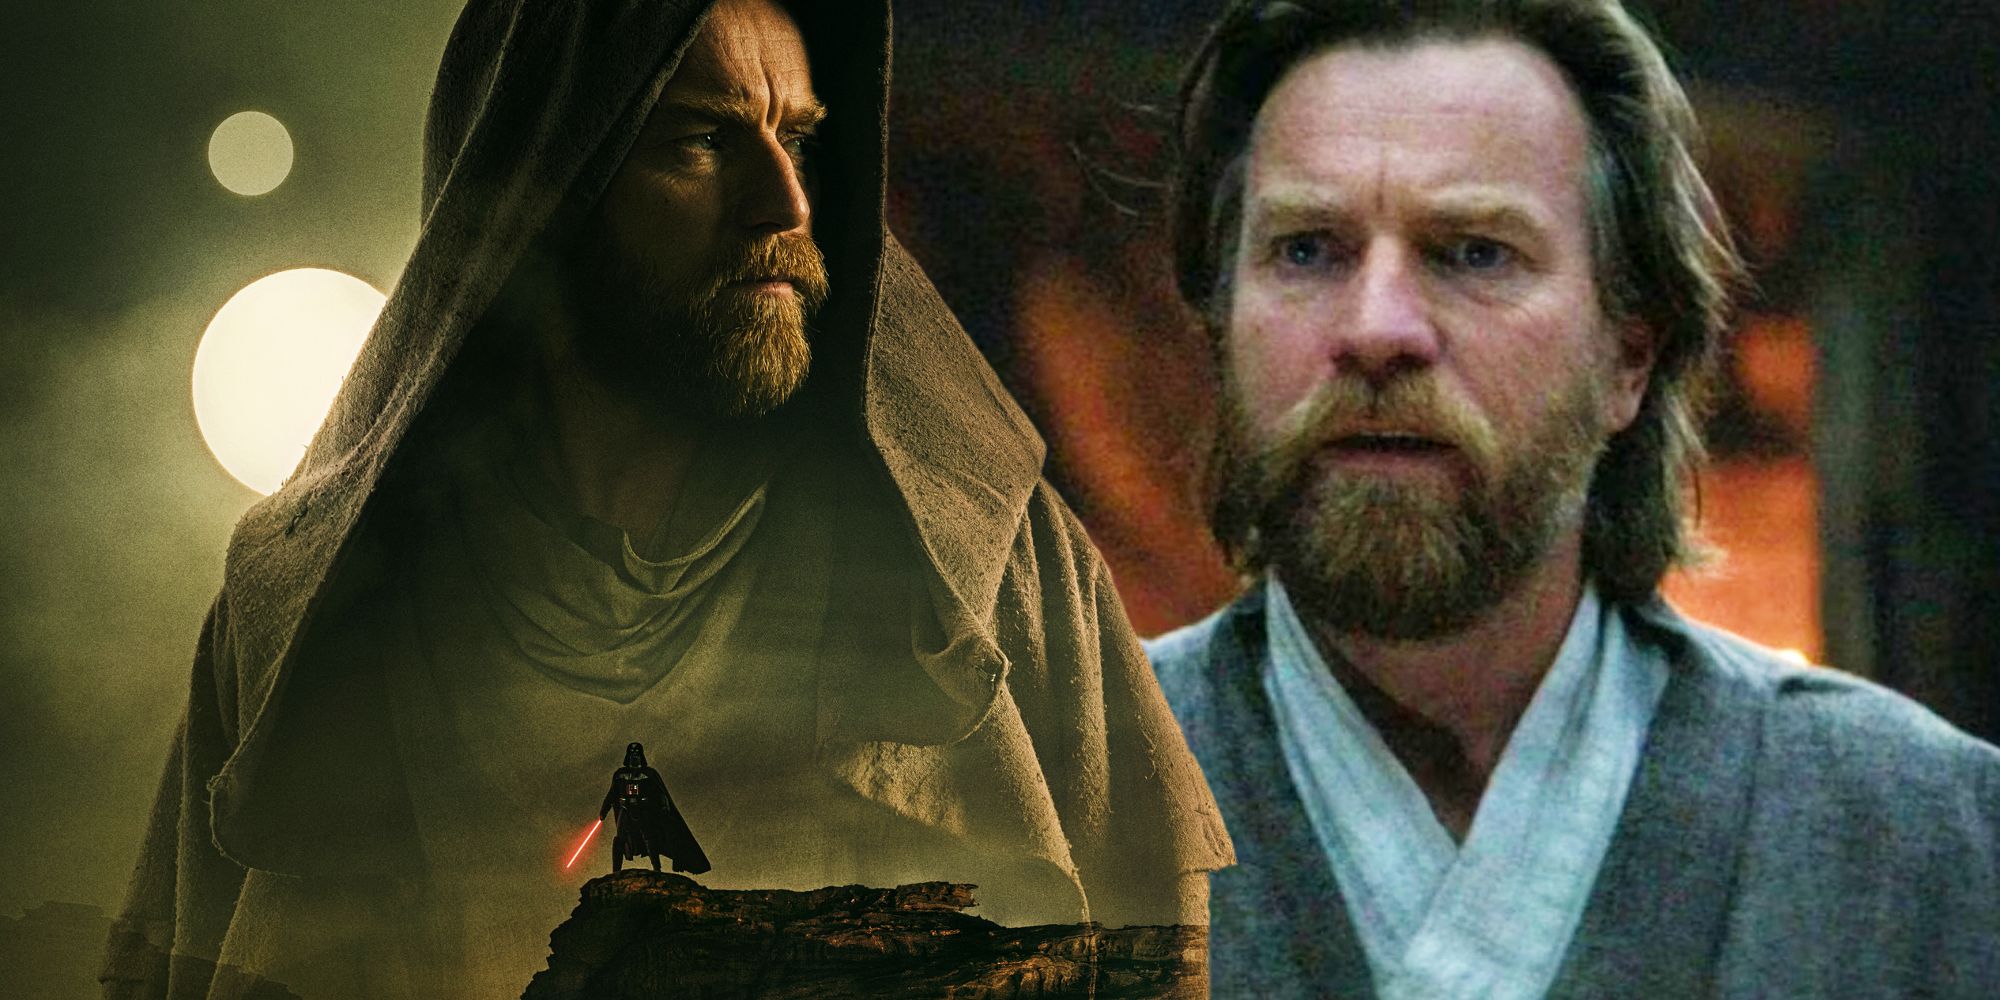 Ewan McGregor as Obi-Wan Kenobi next to the series' poster